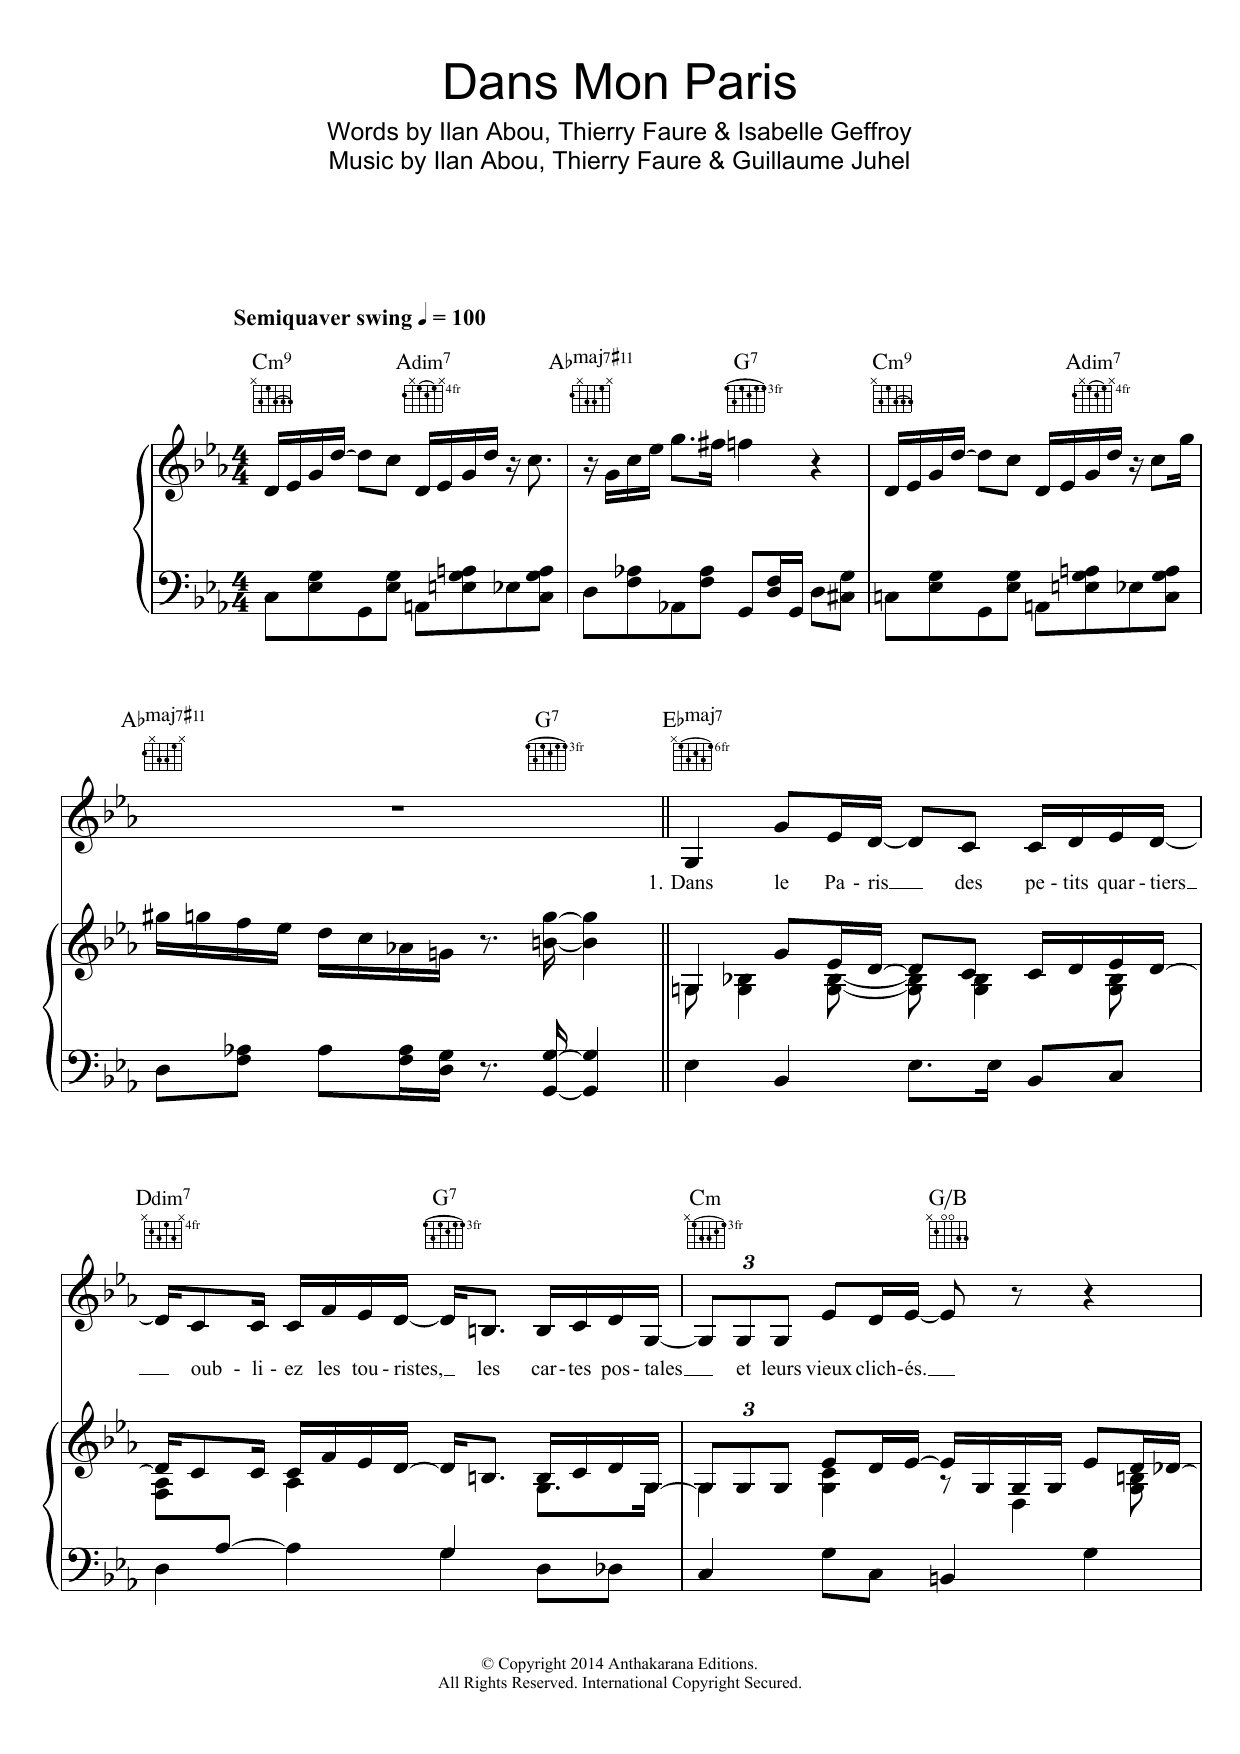 Zaz Dans Mon Paris (Swing Manouche Version) sheet music notes and chords arranged for Piano, Vocal & Guitar Chords